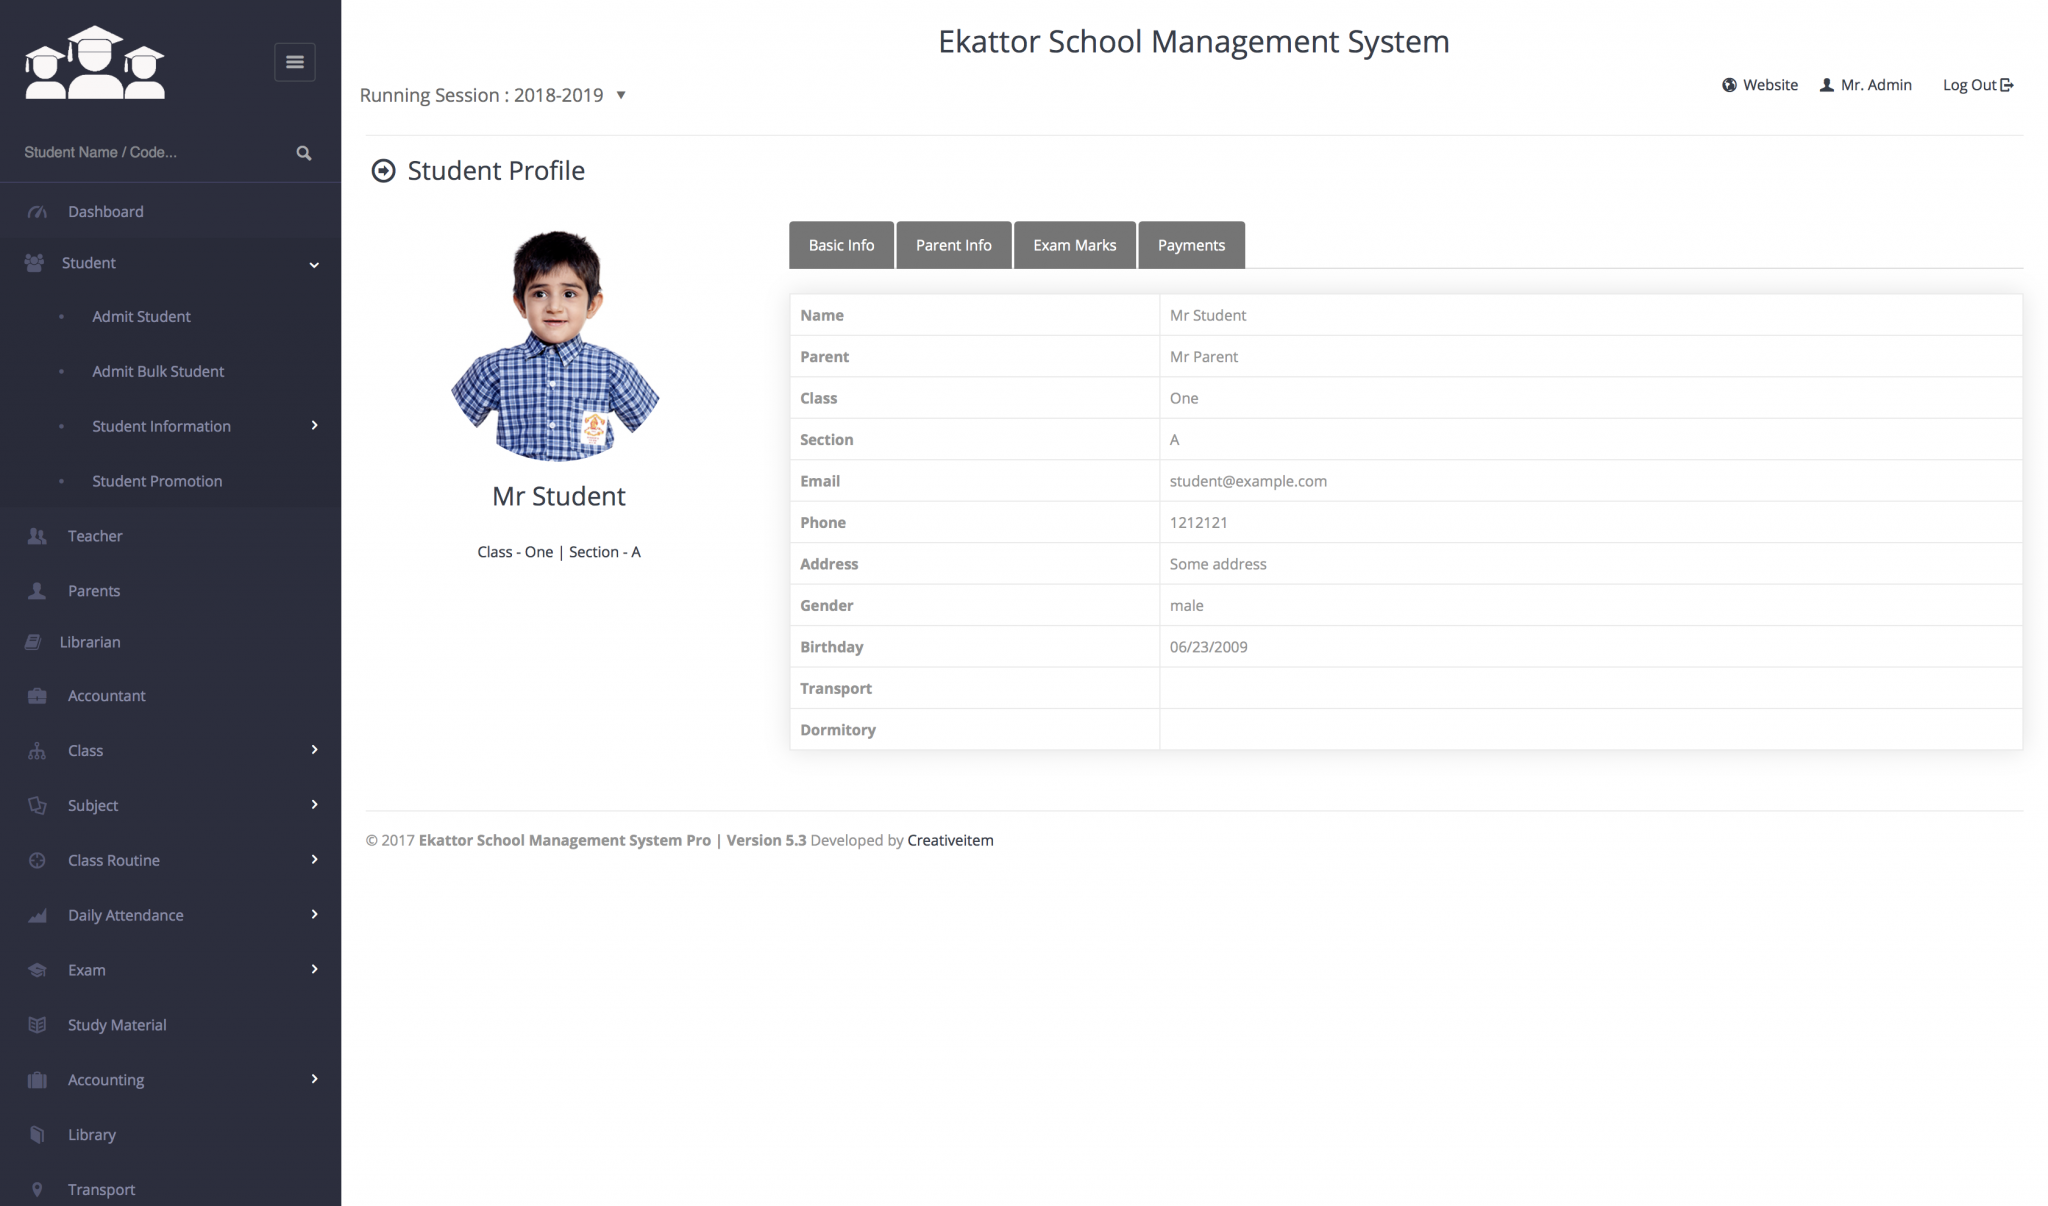 Sistema Escola - Ekattor School Management System Pro